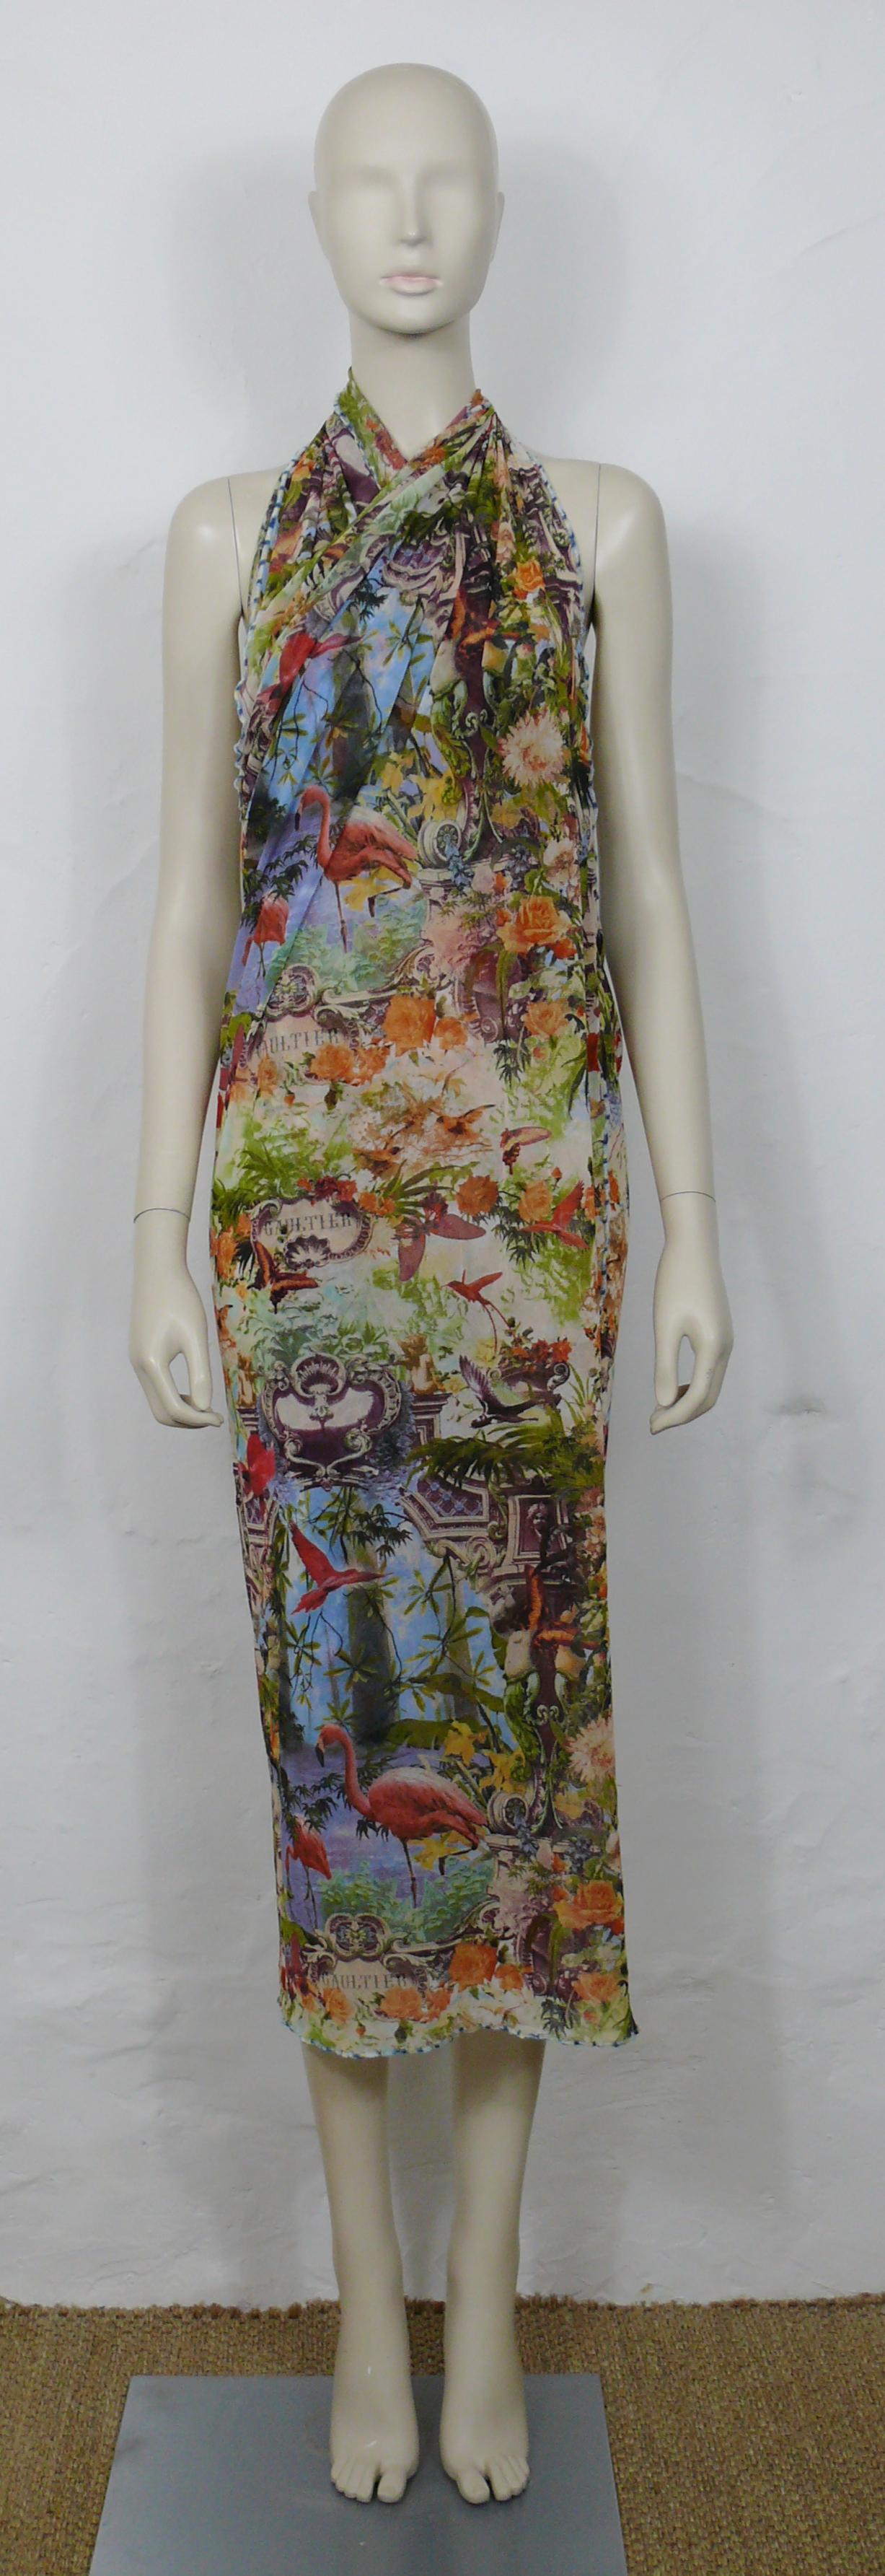 3pcs crop top & shorts set with floral print sheer mesh dress